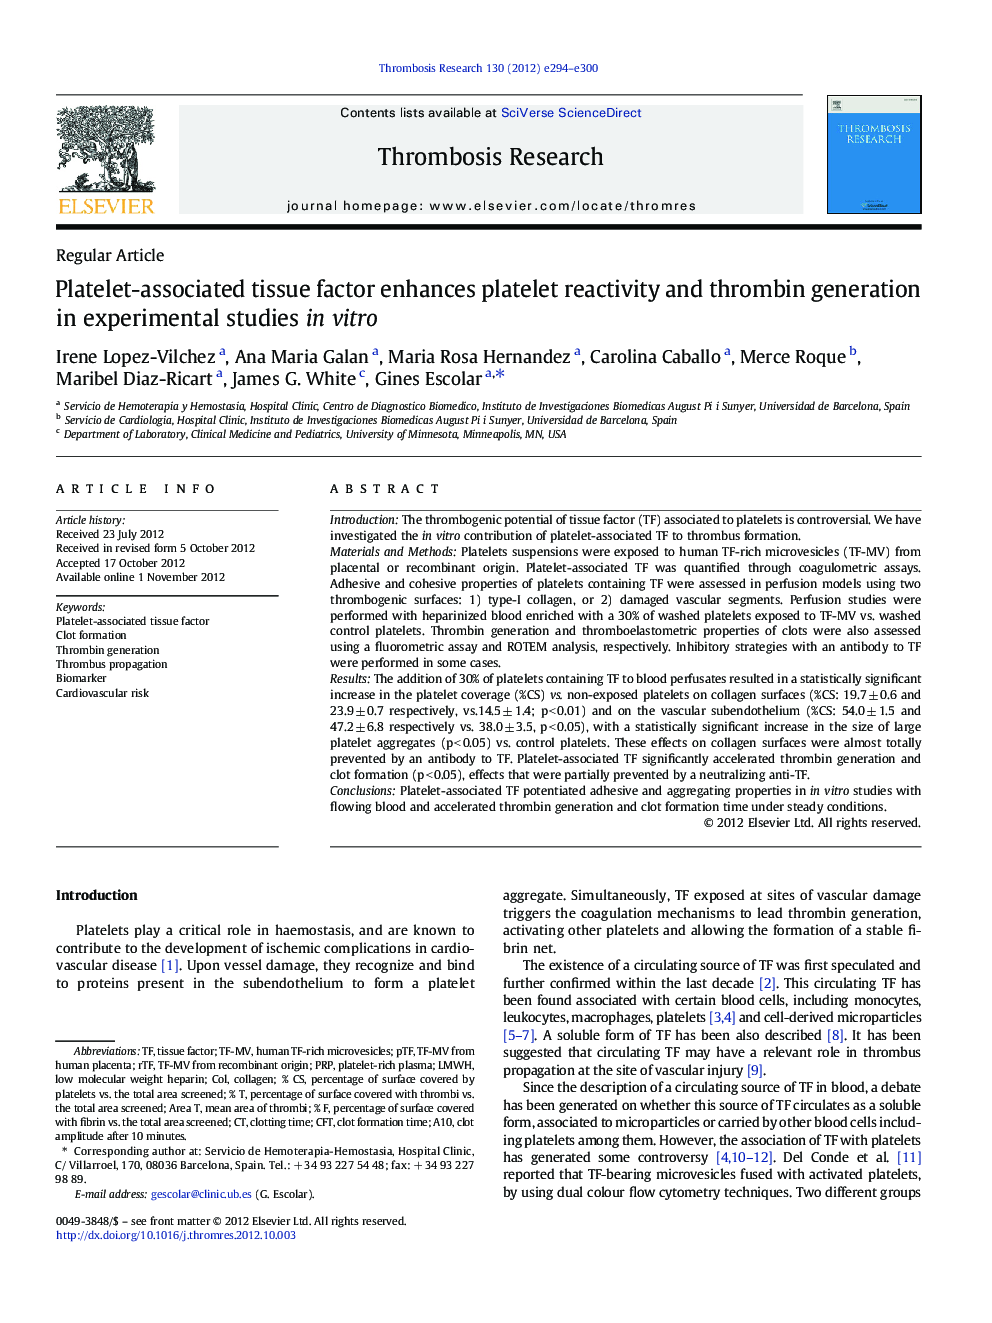 Platelet-associated tissue factor enhances platelet reactivity and thrombin generation in experimental studies in vitro